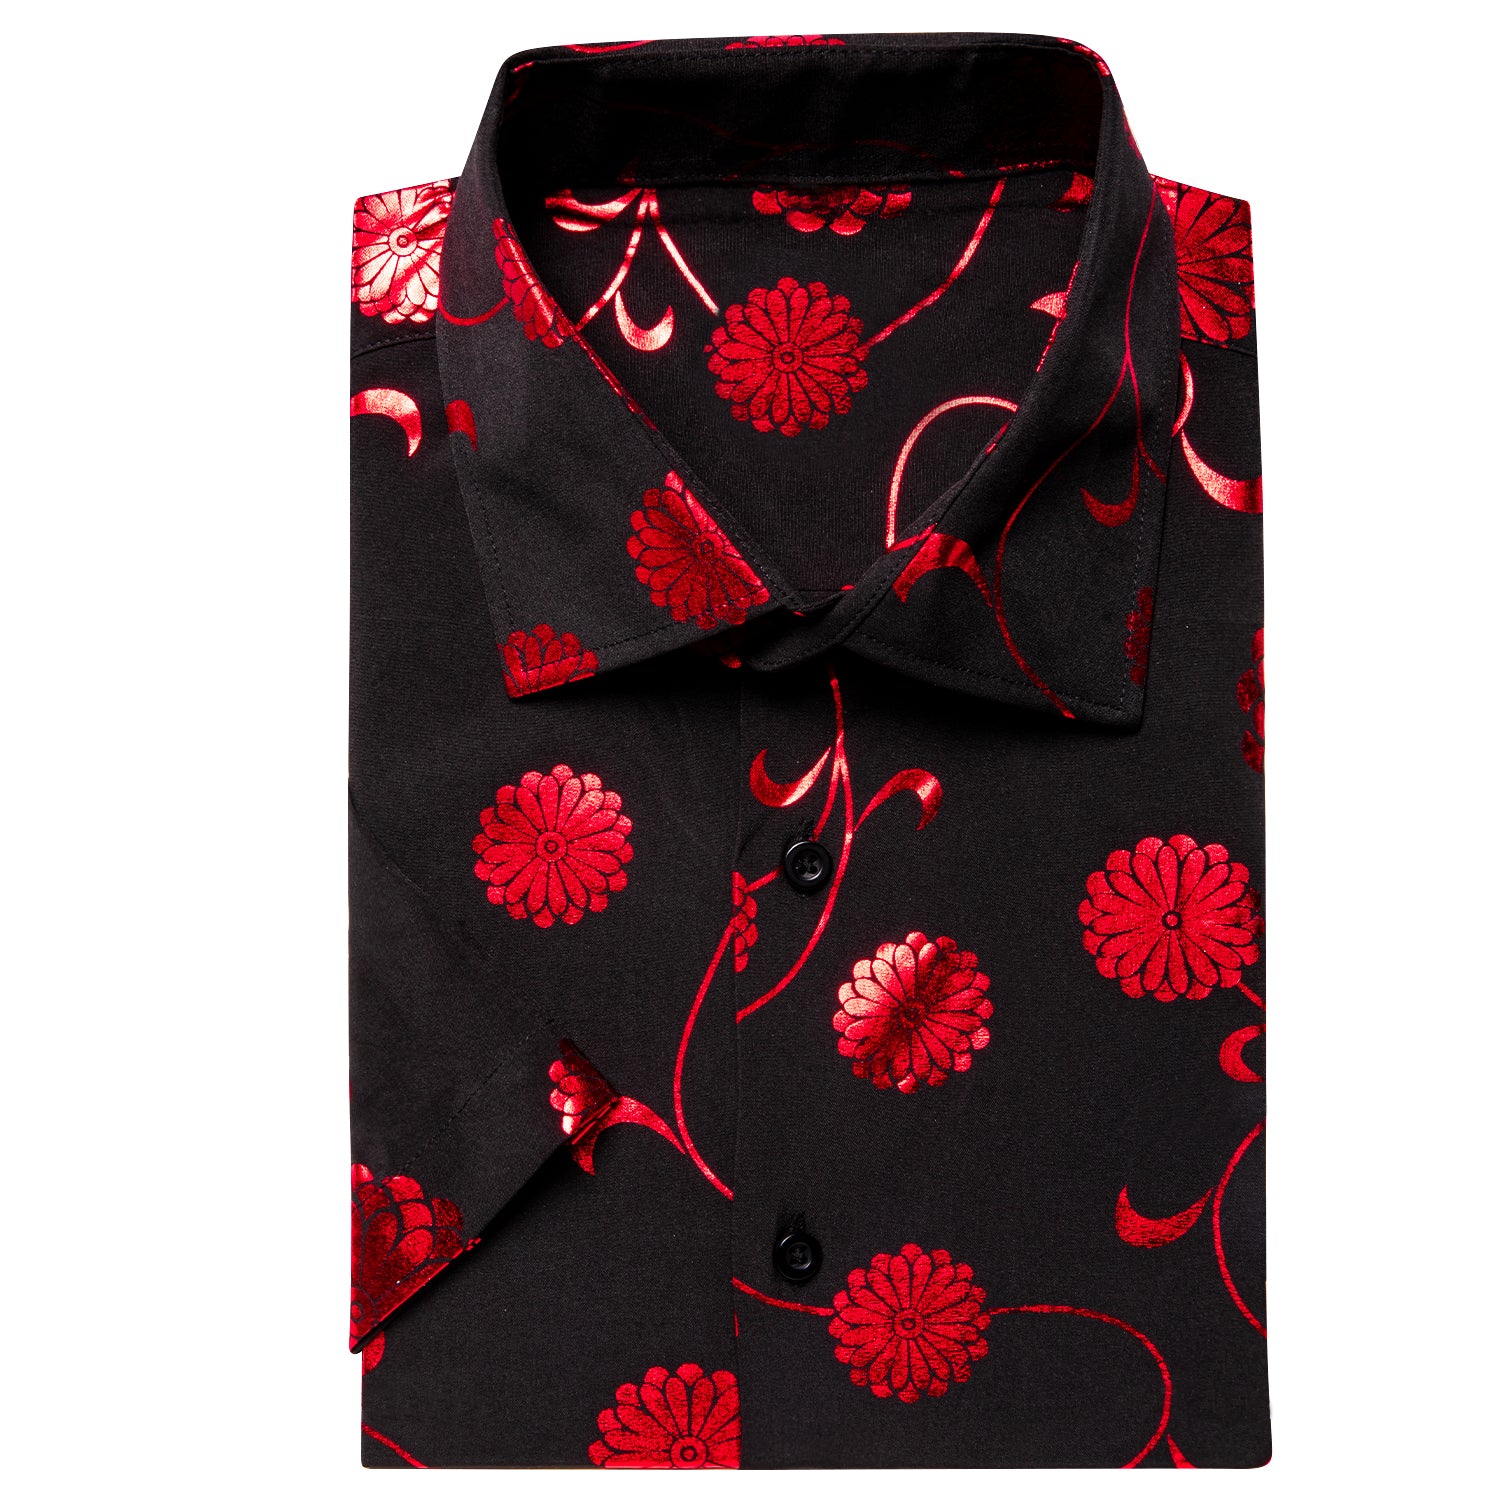 Clearance Sale New Black Red Flower Men's Short Sleeve Shirt